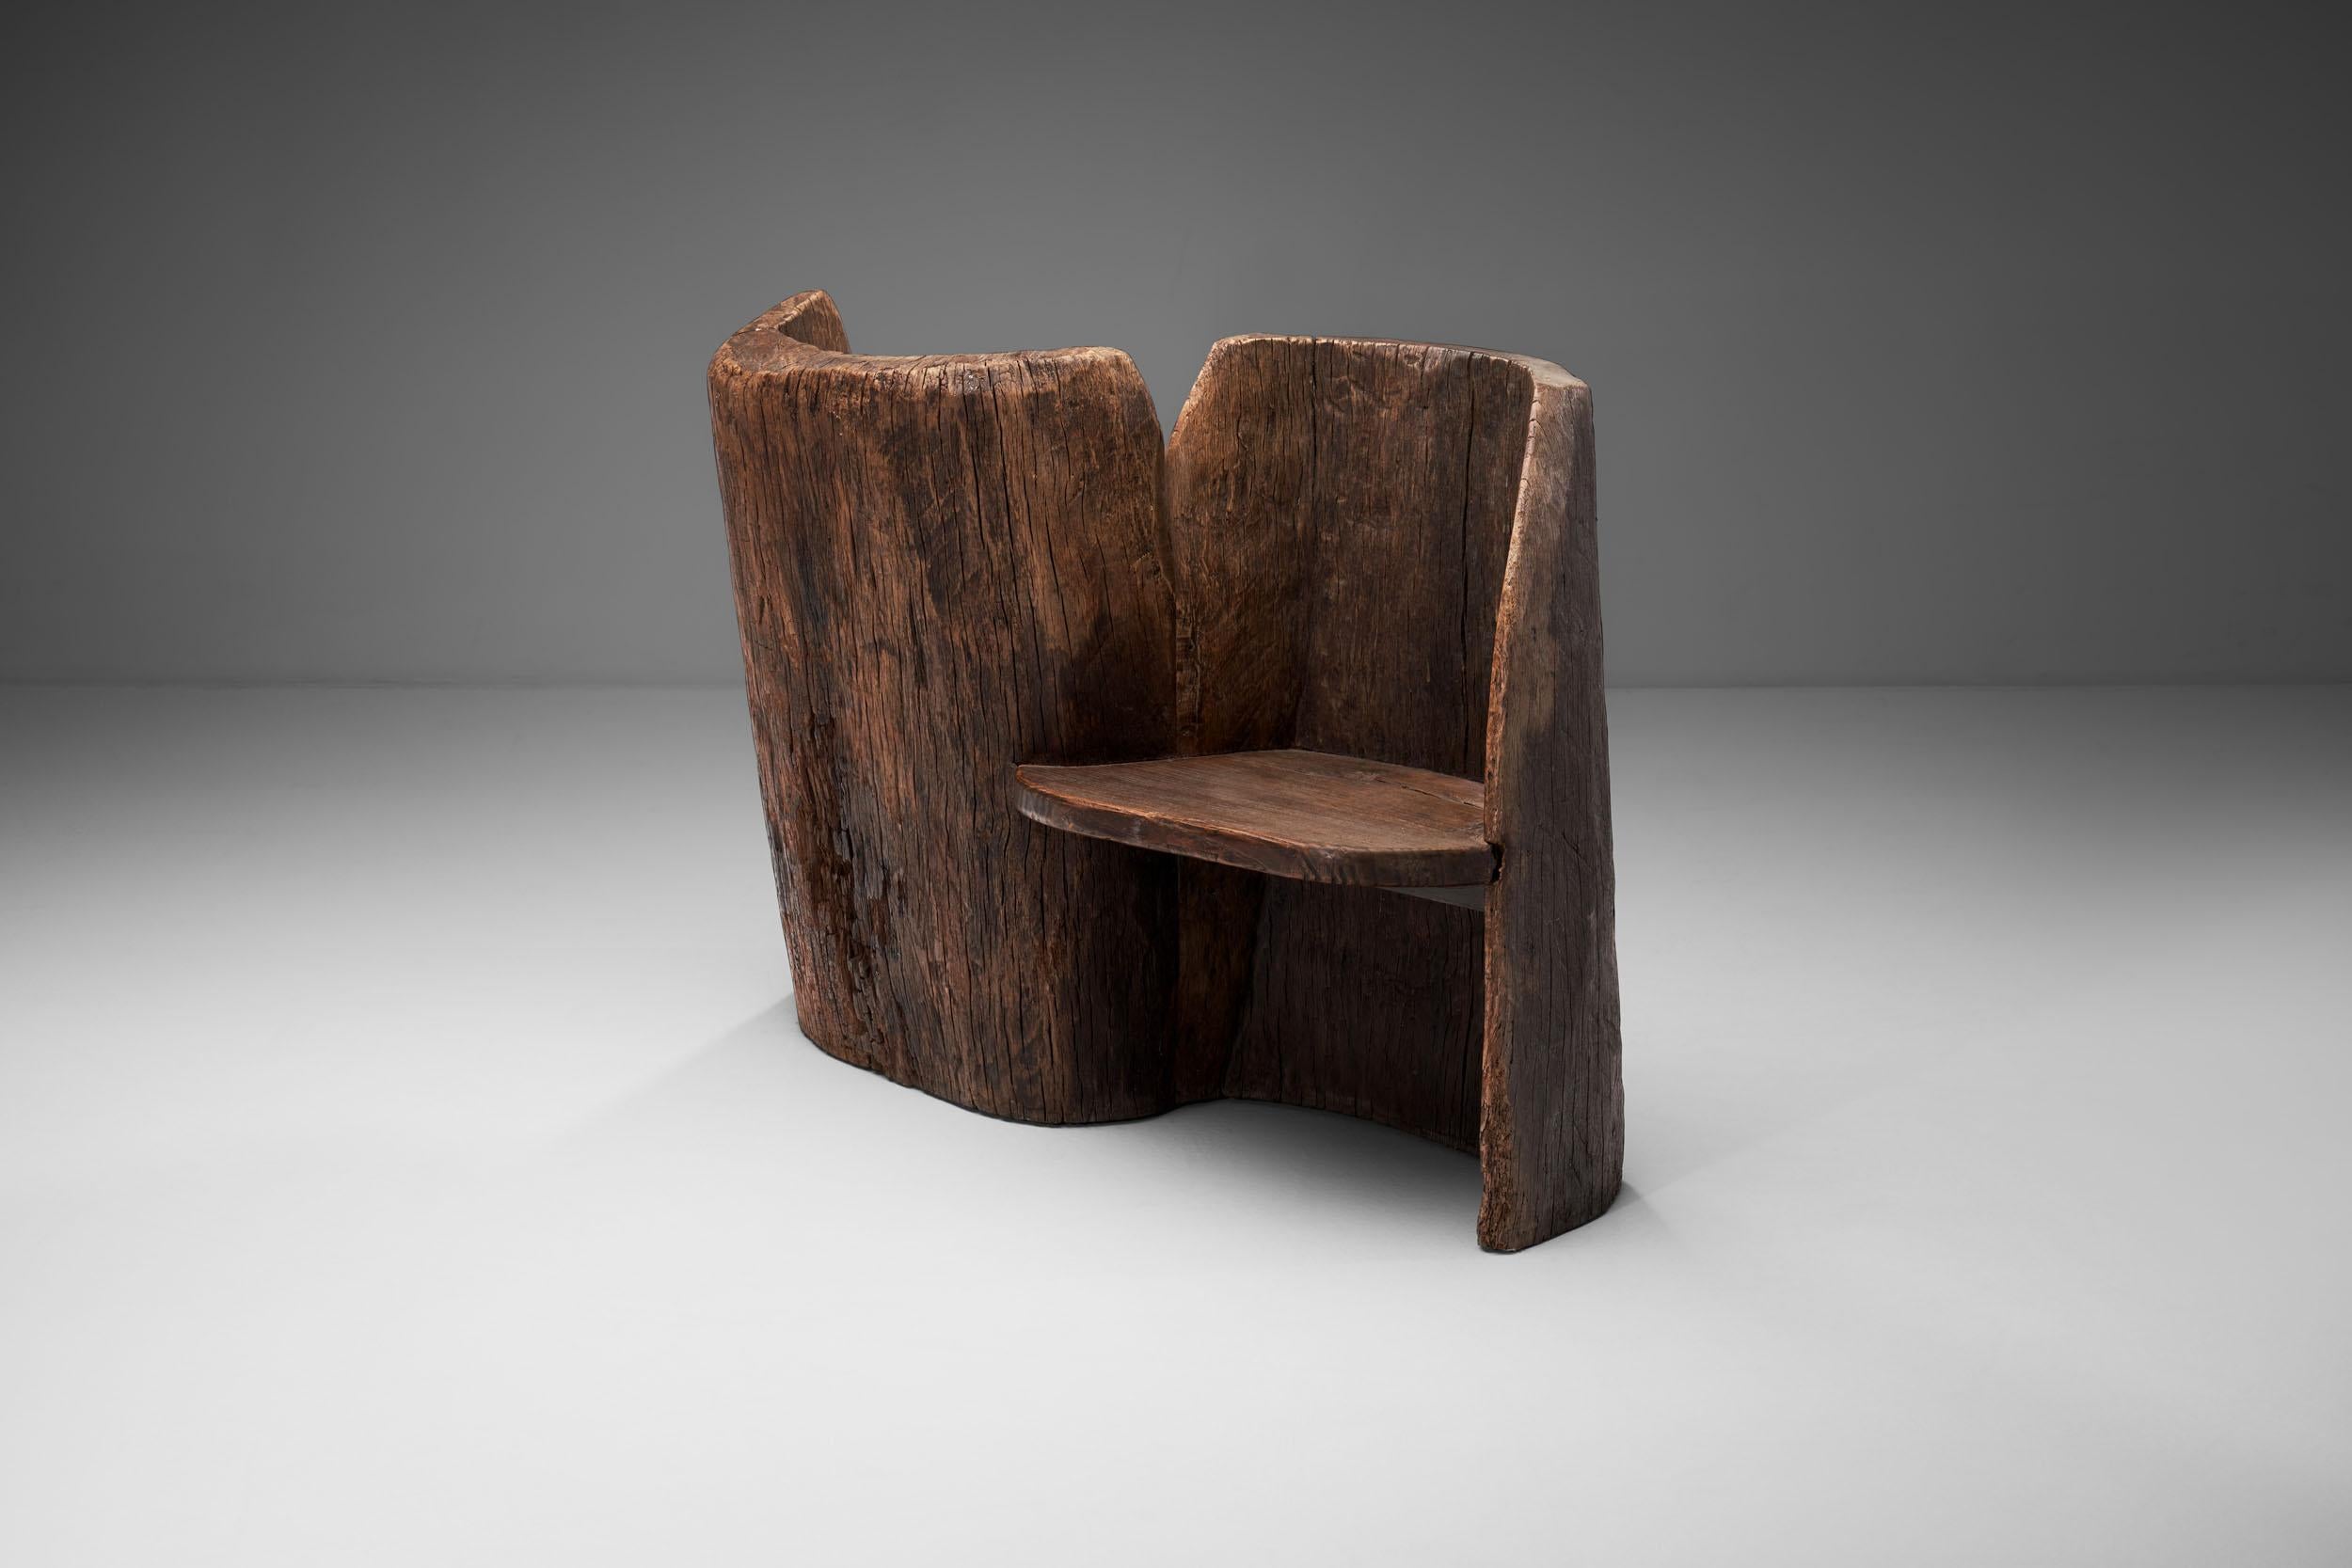 Tibetan Carved Wood “Tête a Tête” Love Seat, Tibet 19th Century For Sale 1